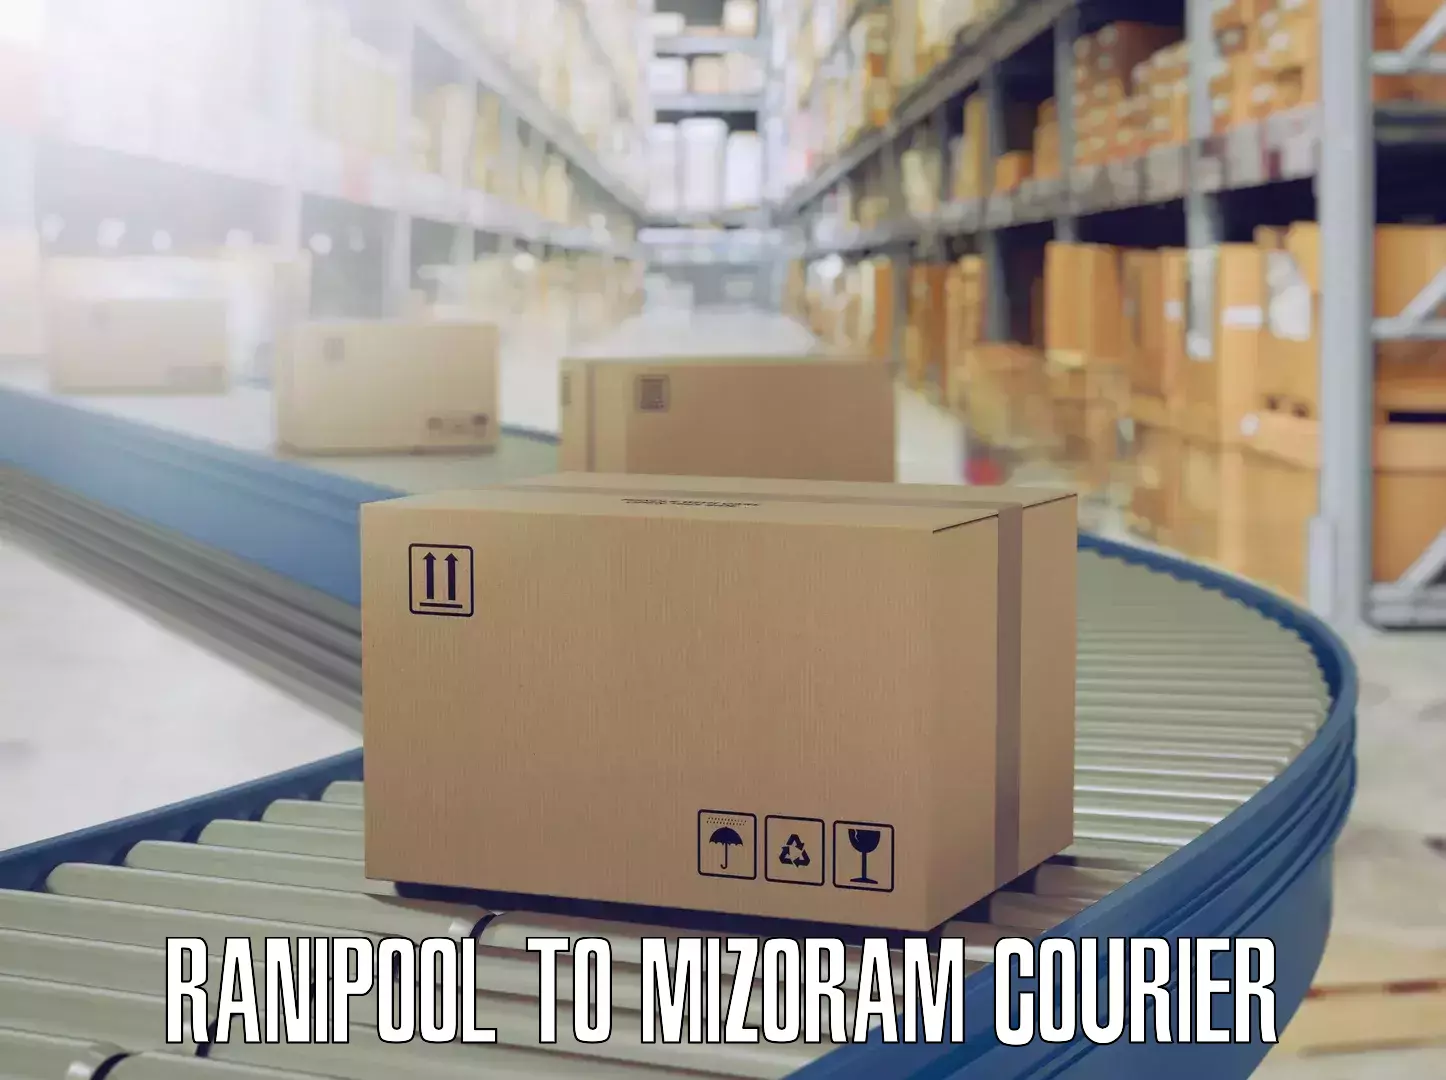 Expert moving and storage Ranipool to Mizoram